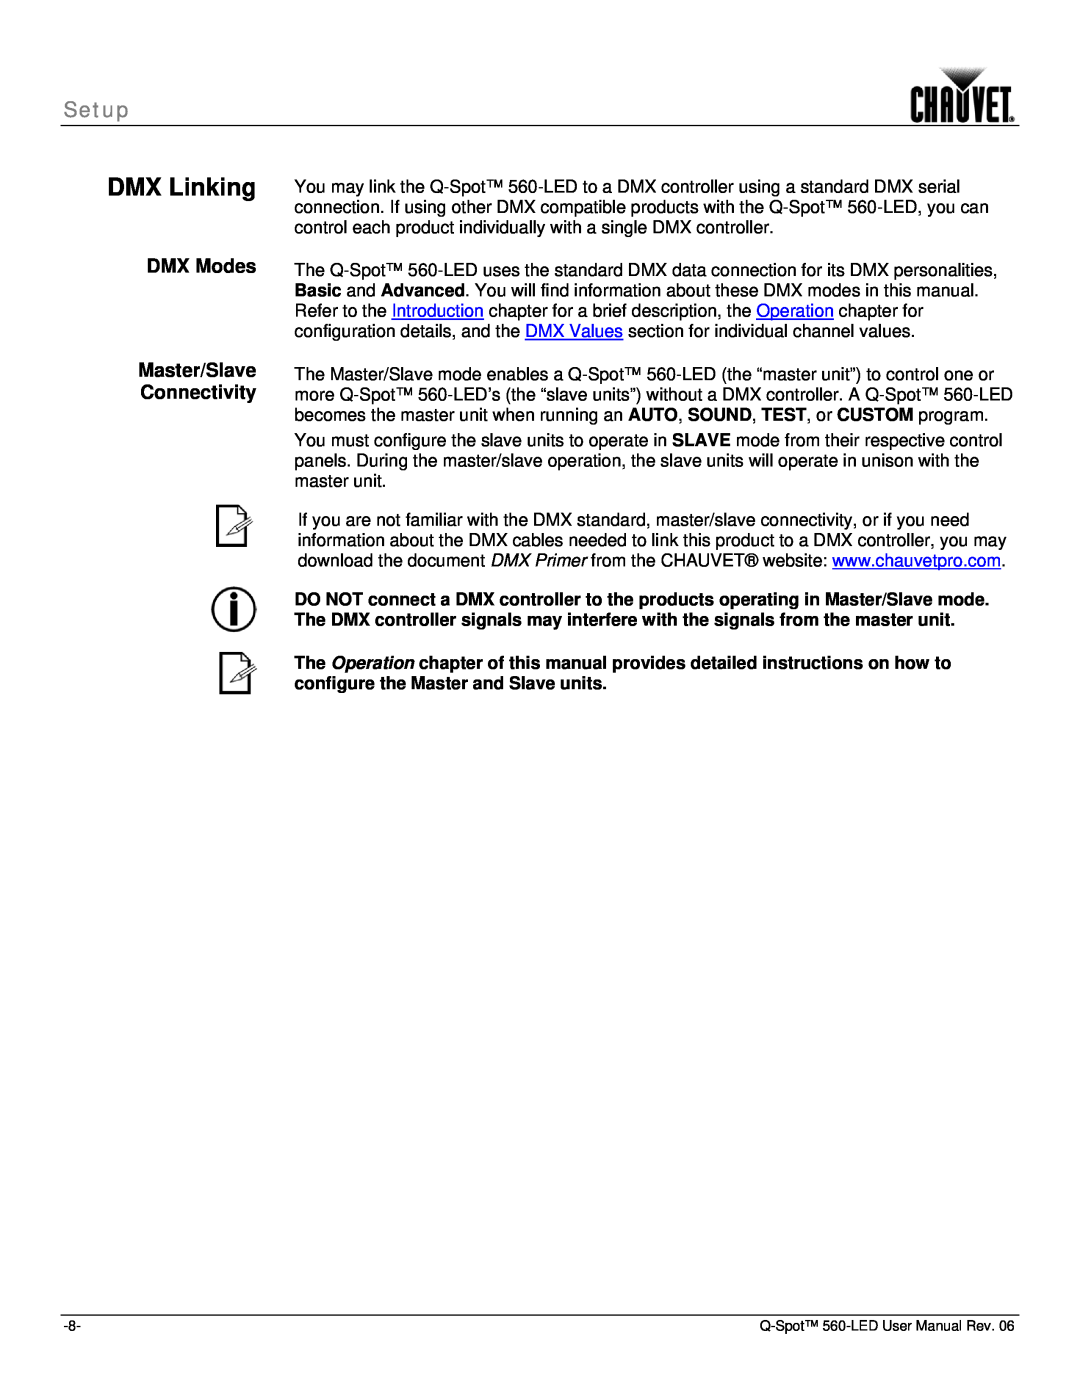 Chauvet 560 user manual DMX Linking, DMX Modes, Setup 